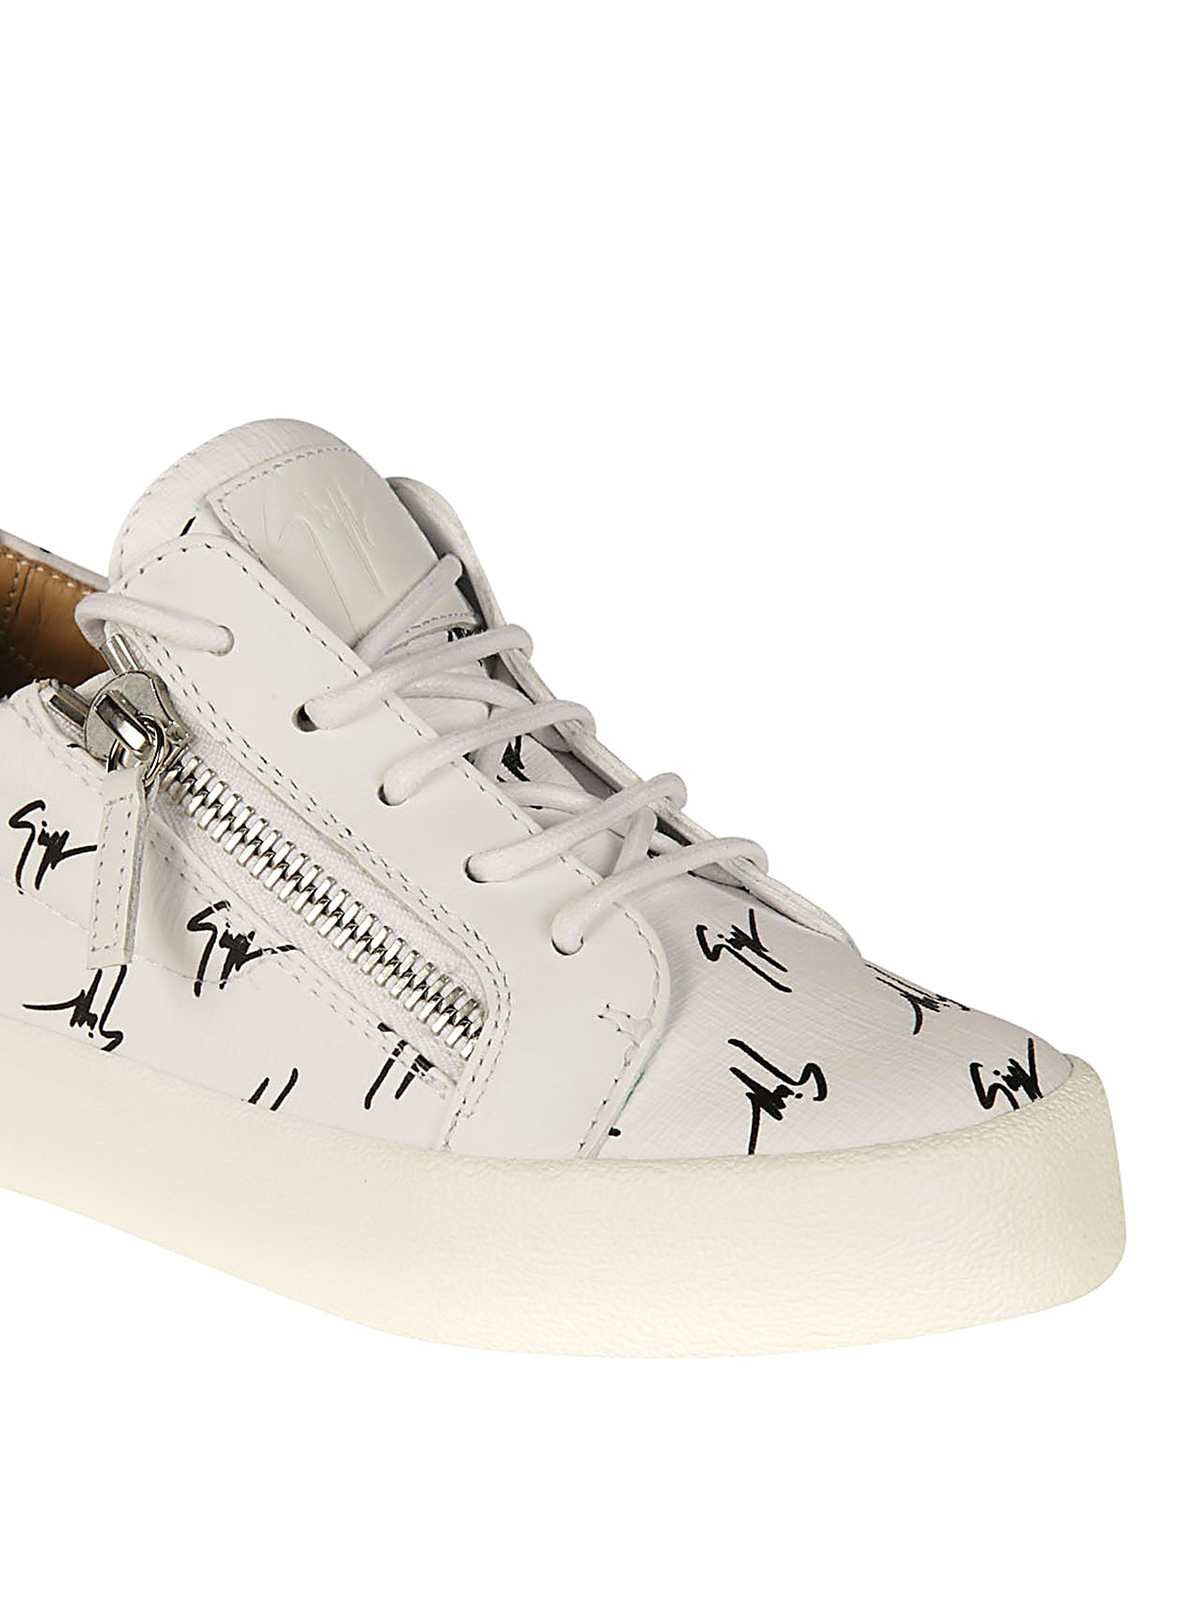 giuseppe zanotti the signature sneakers